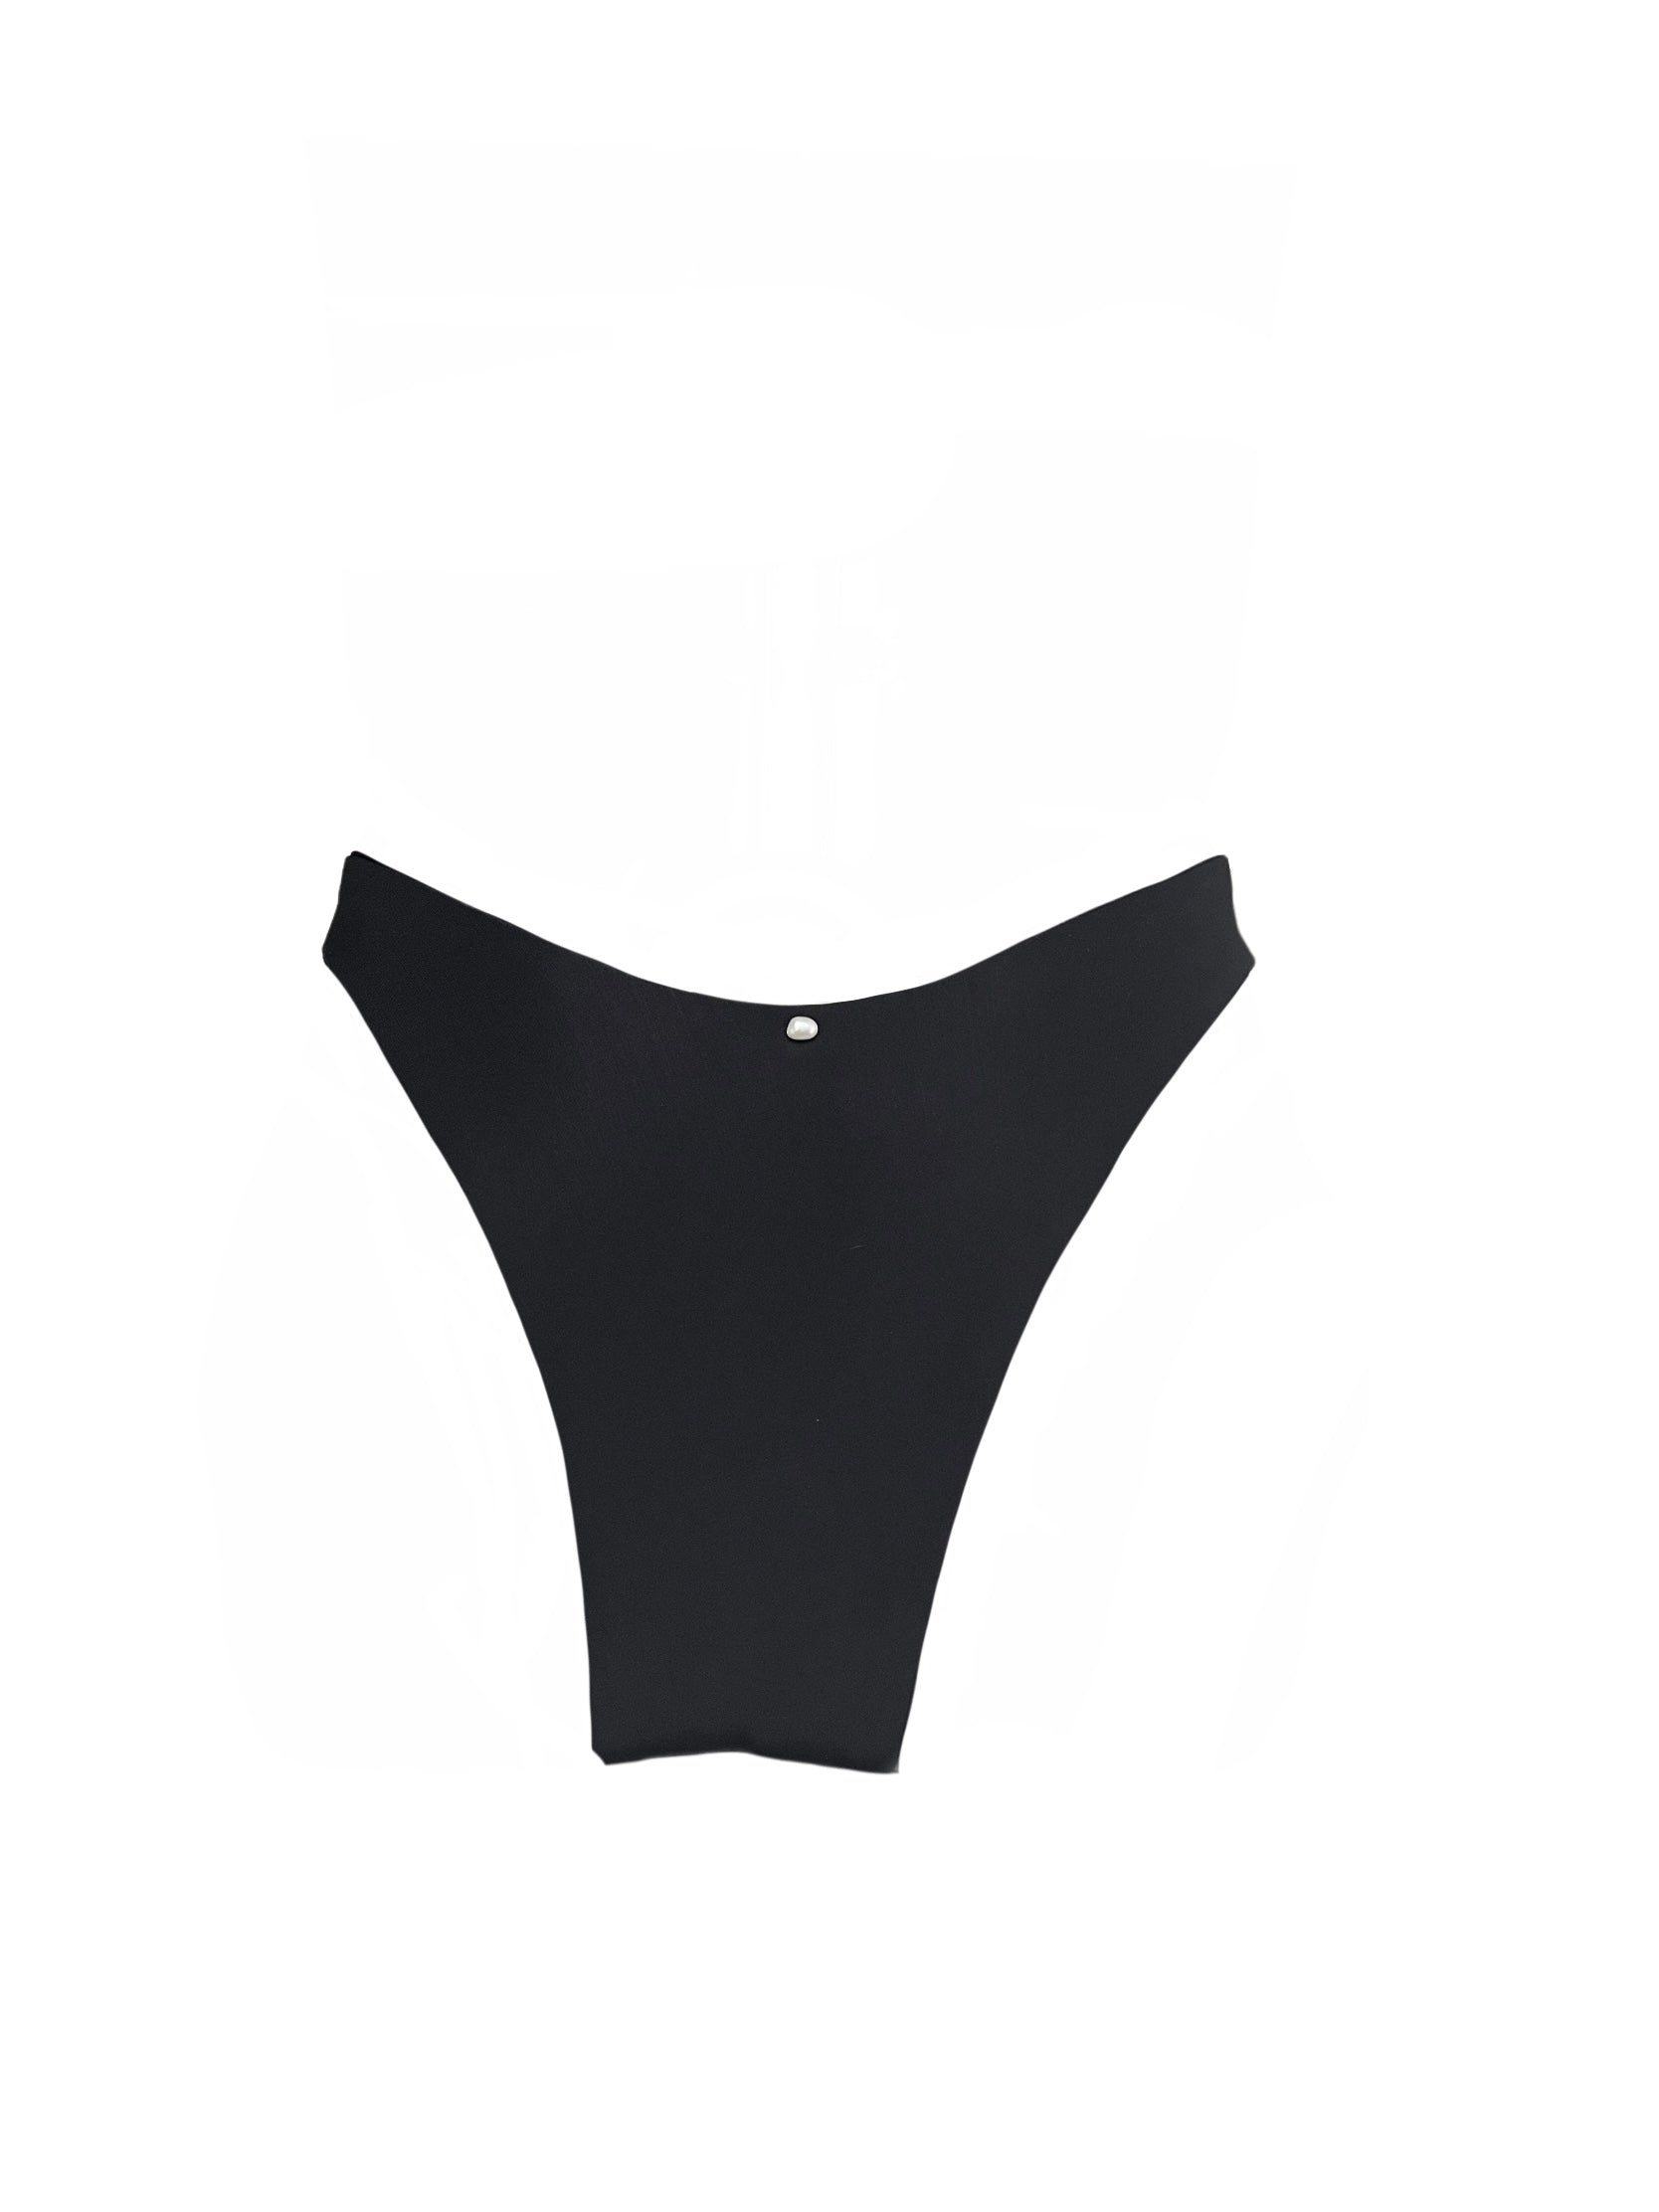 Bas de maillot de bain recyclé 90’s - Premium swimwear from PEARLA DESIGN - Just $70! Shop now at PEARLA DESIGN